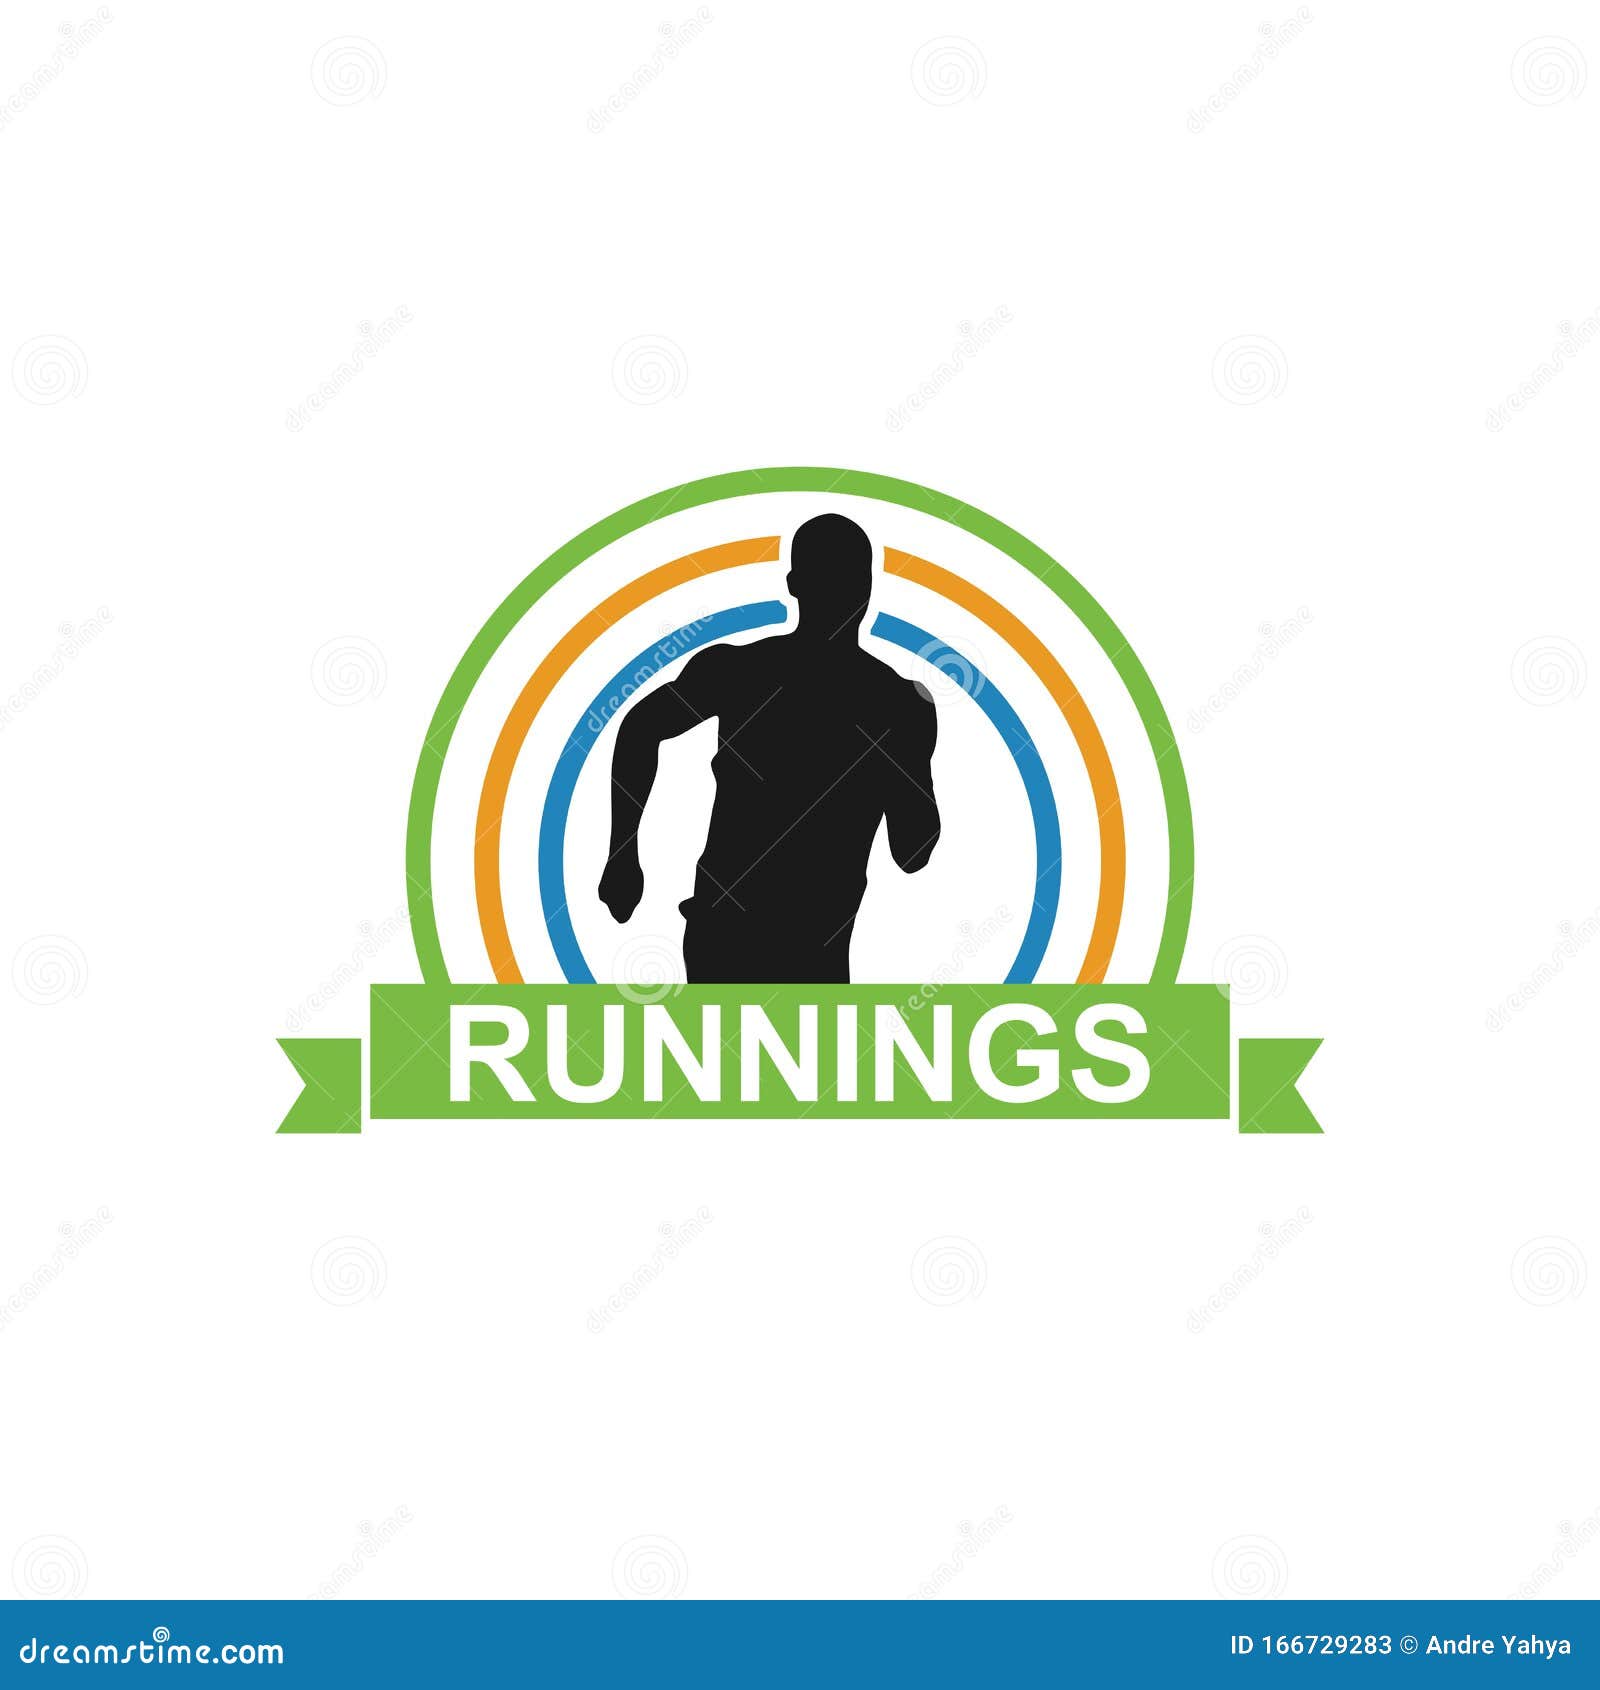 Running Logo Template. Running Silhouette Graphic Stock Illustration ...